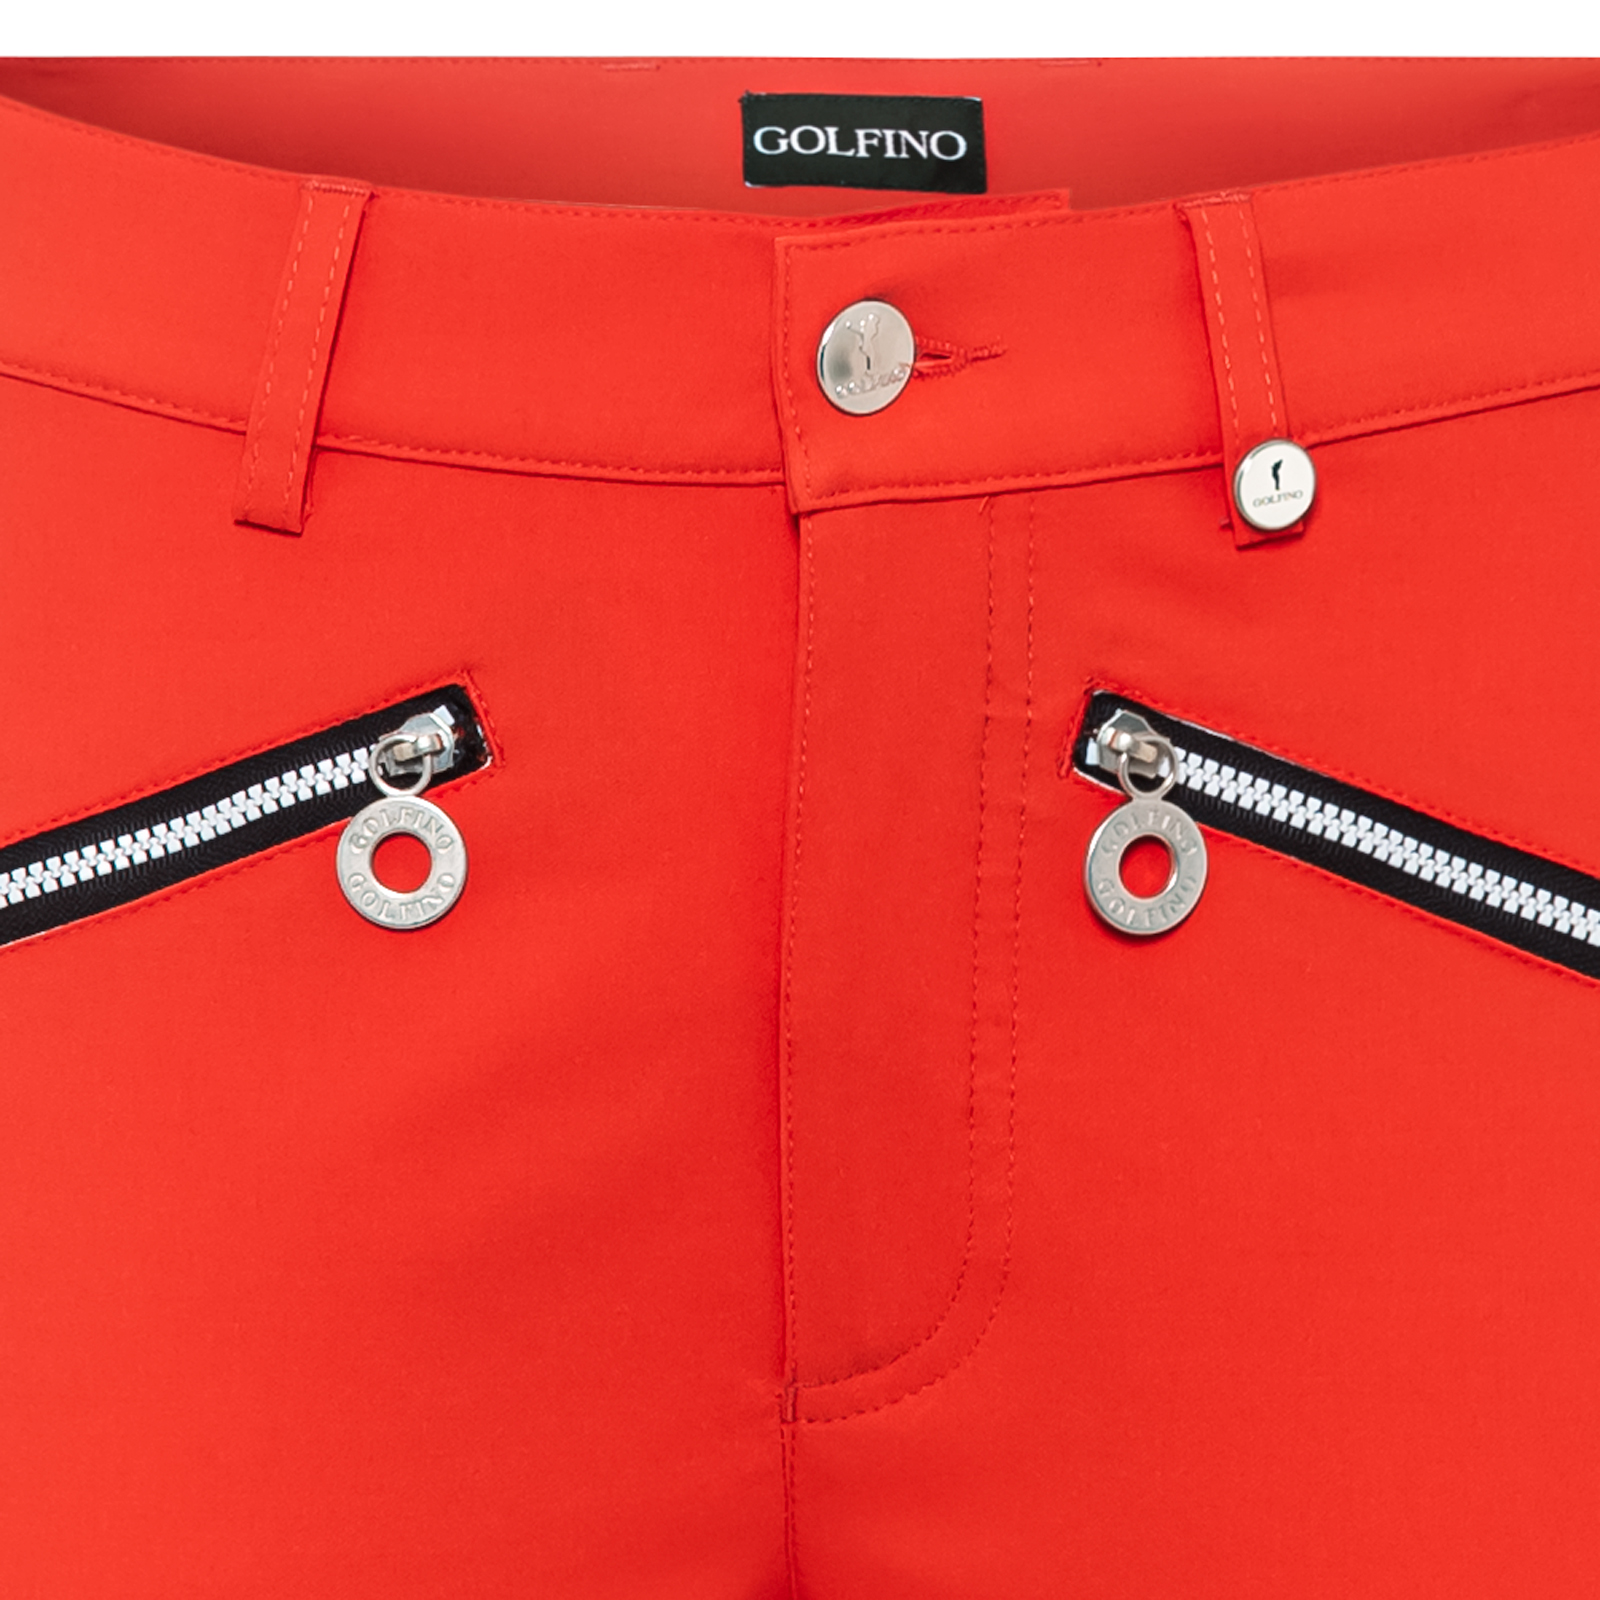 Modernos pantalones de golf con cálido tejido elástico para mujer